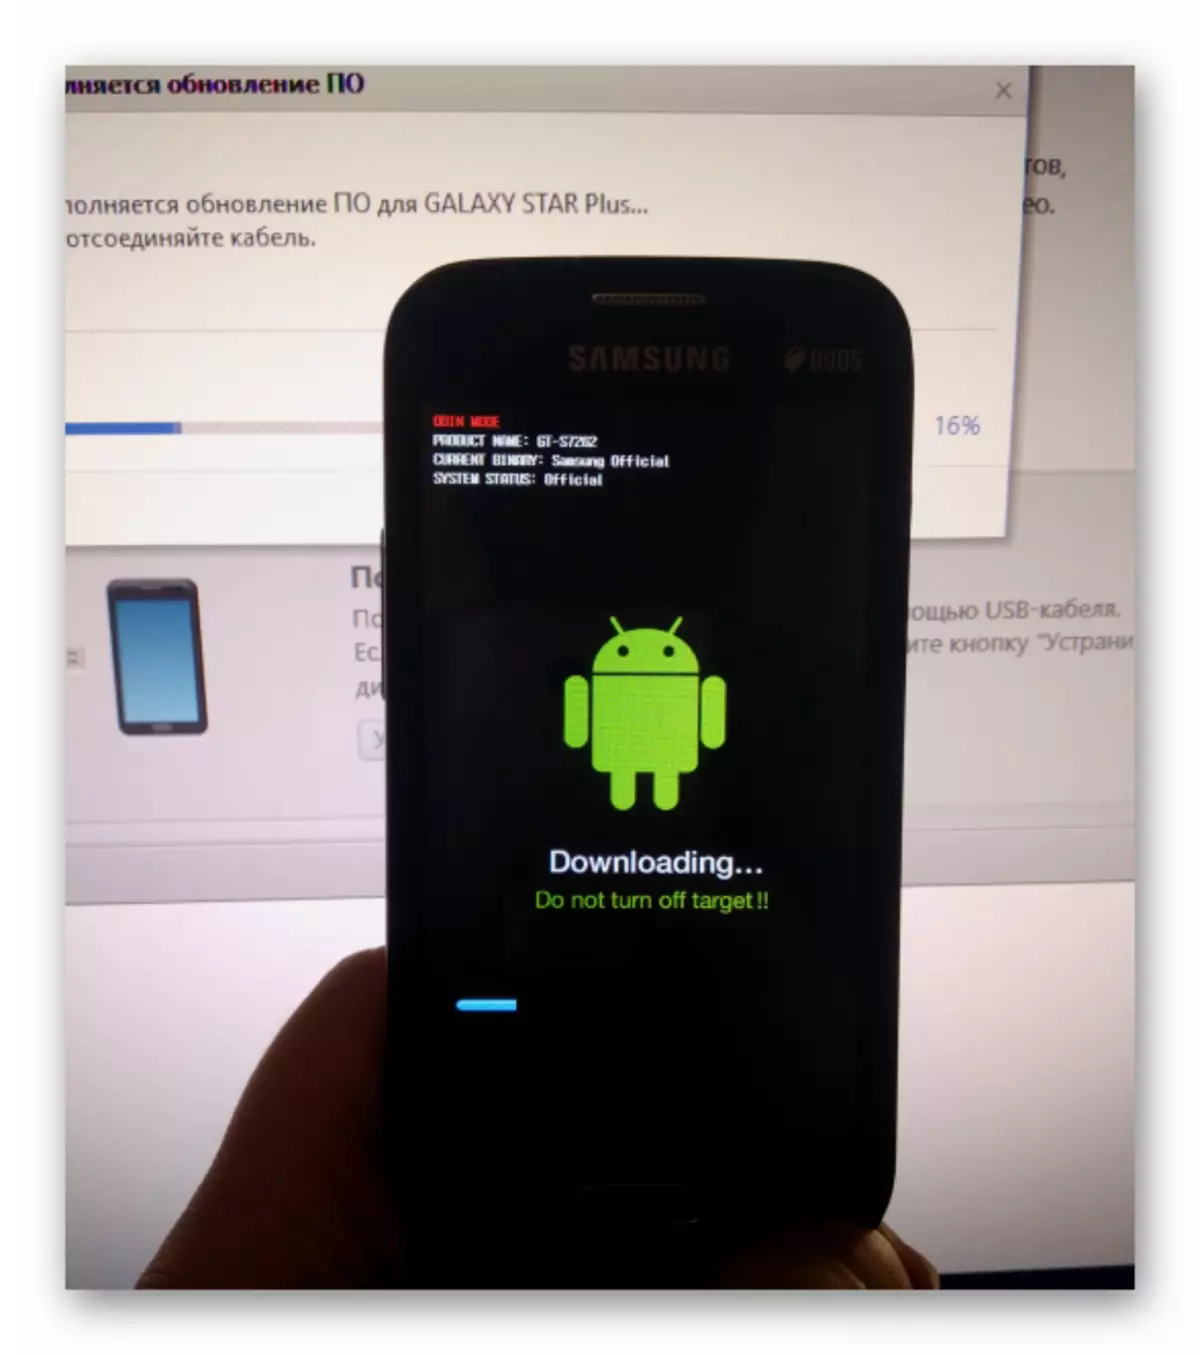 Samsung Galaxy Star Plus GT-S7262 Kies Intricator განახლება სმარტფონის ეკრანზე